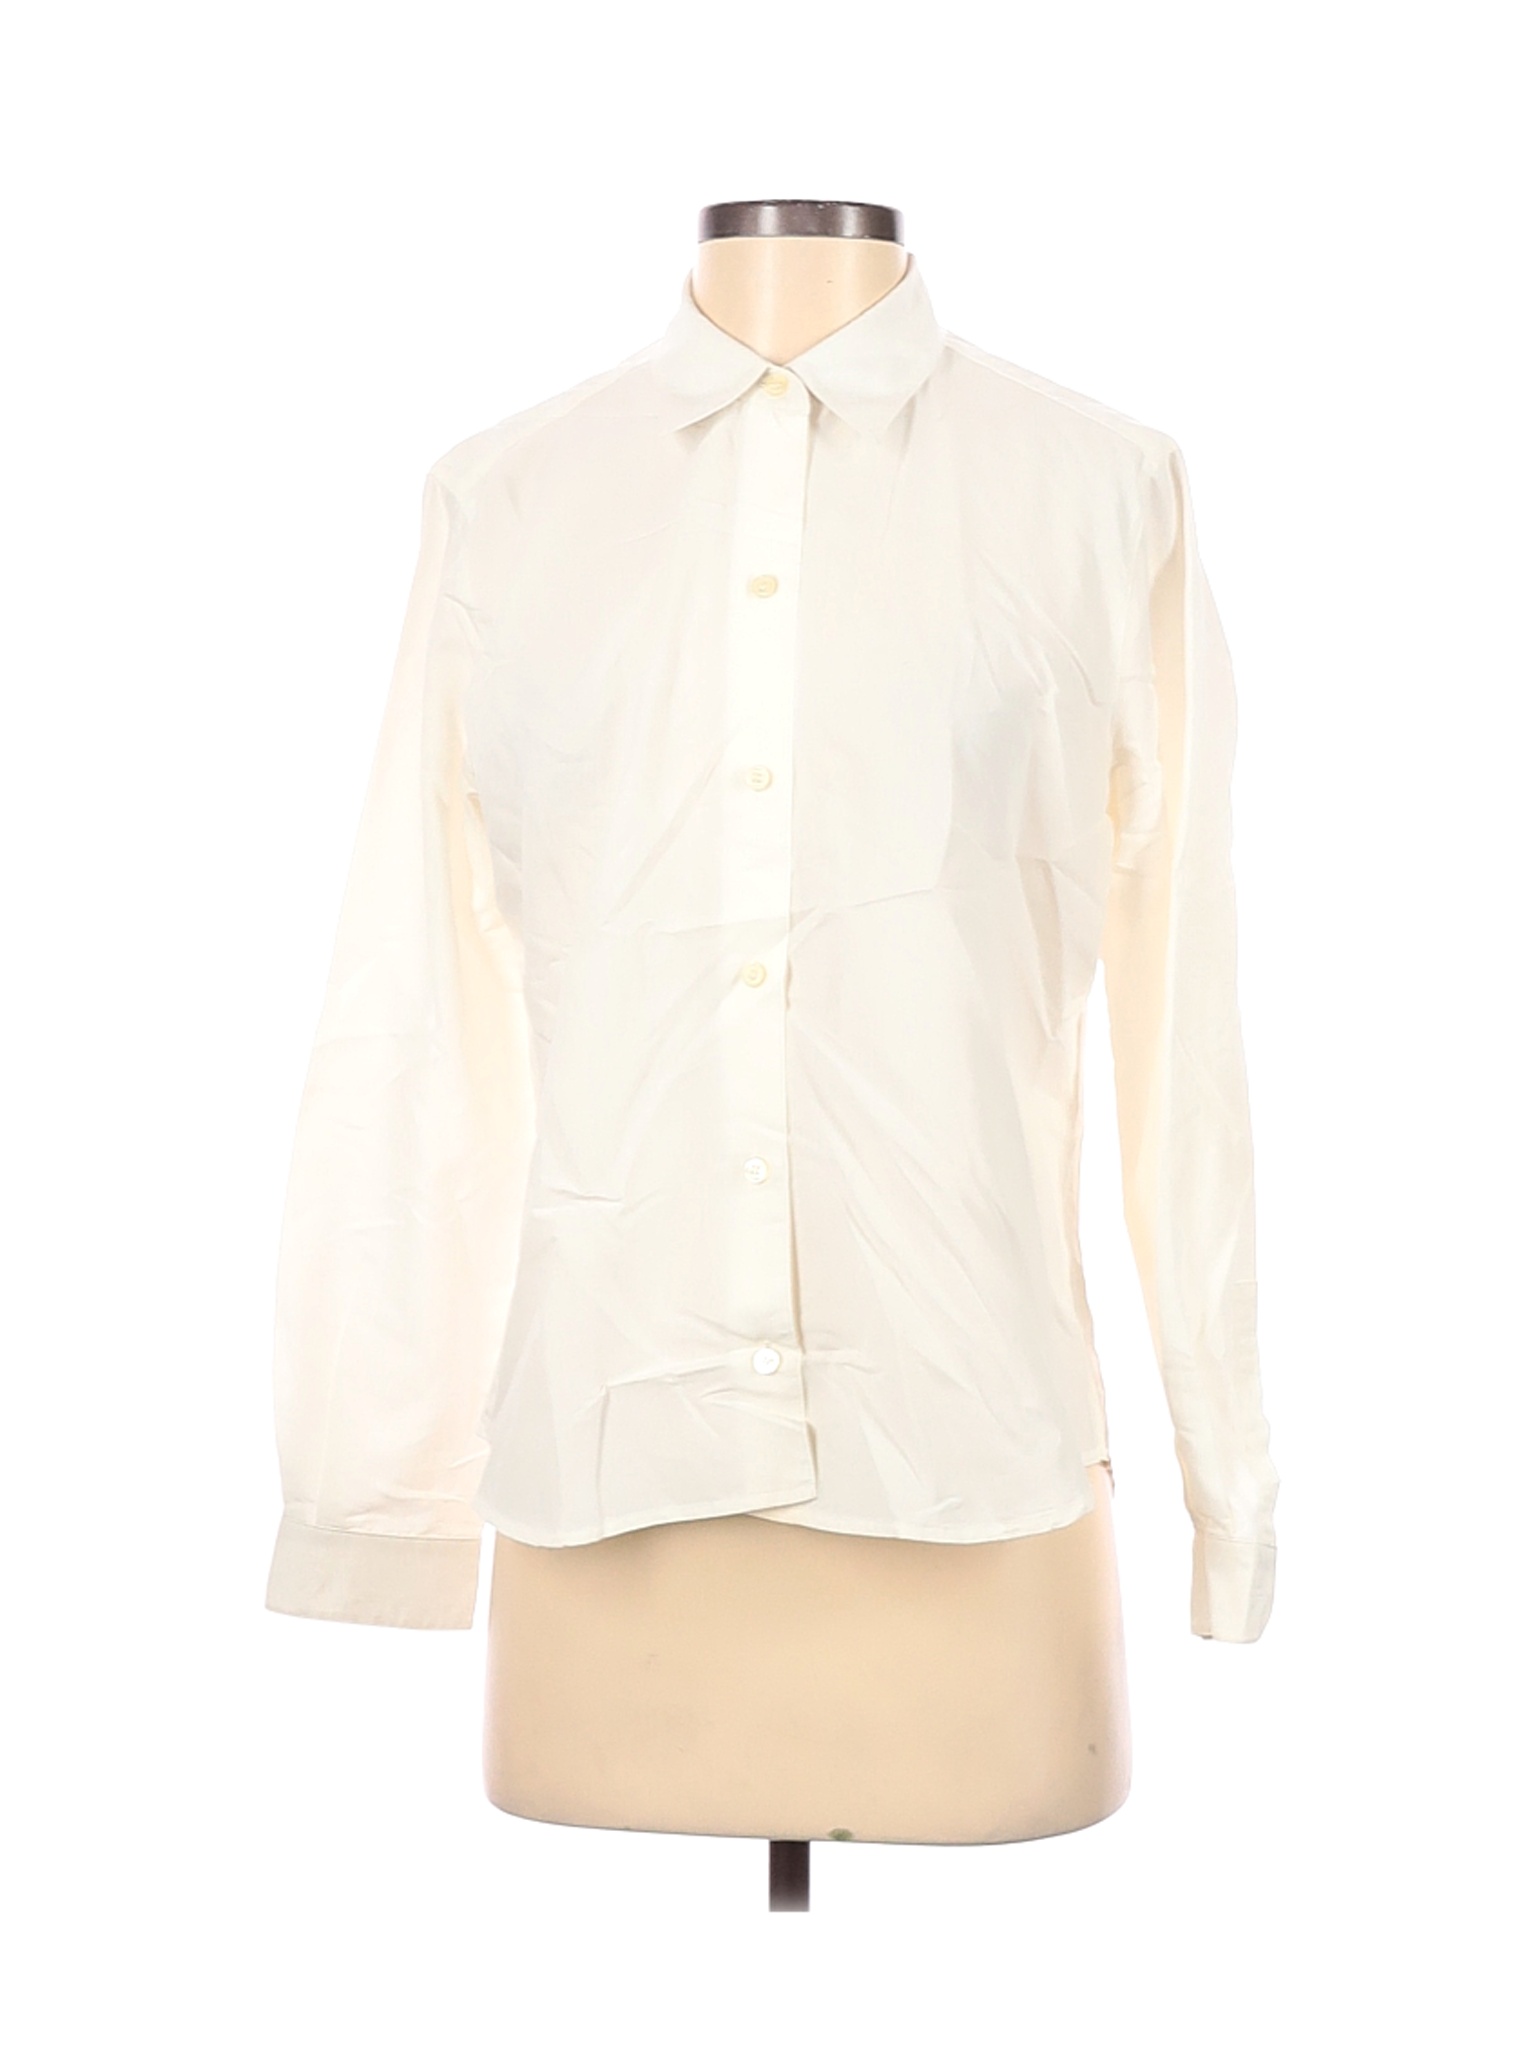 Liz Claiborne Women Ivory Long Sleeve Button-Down Shirt S | eBay